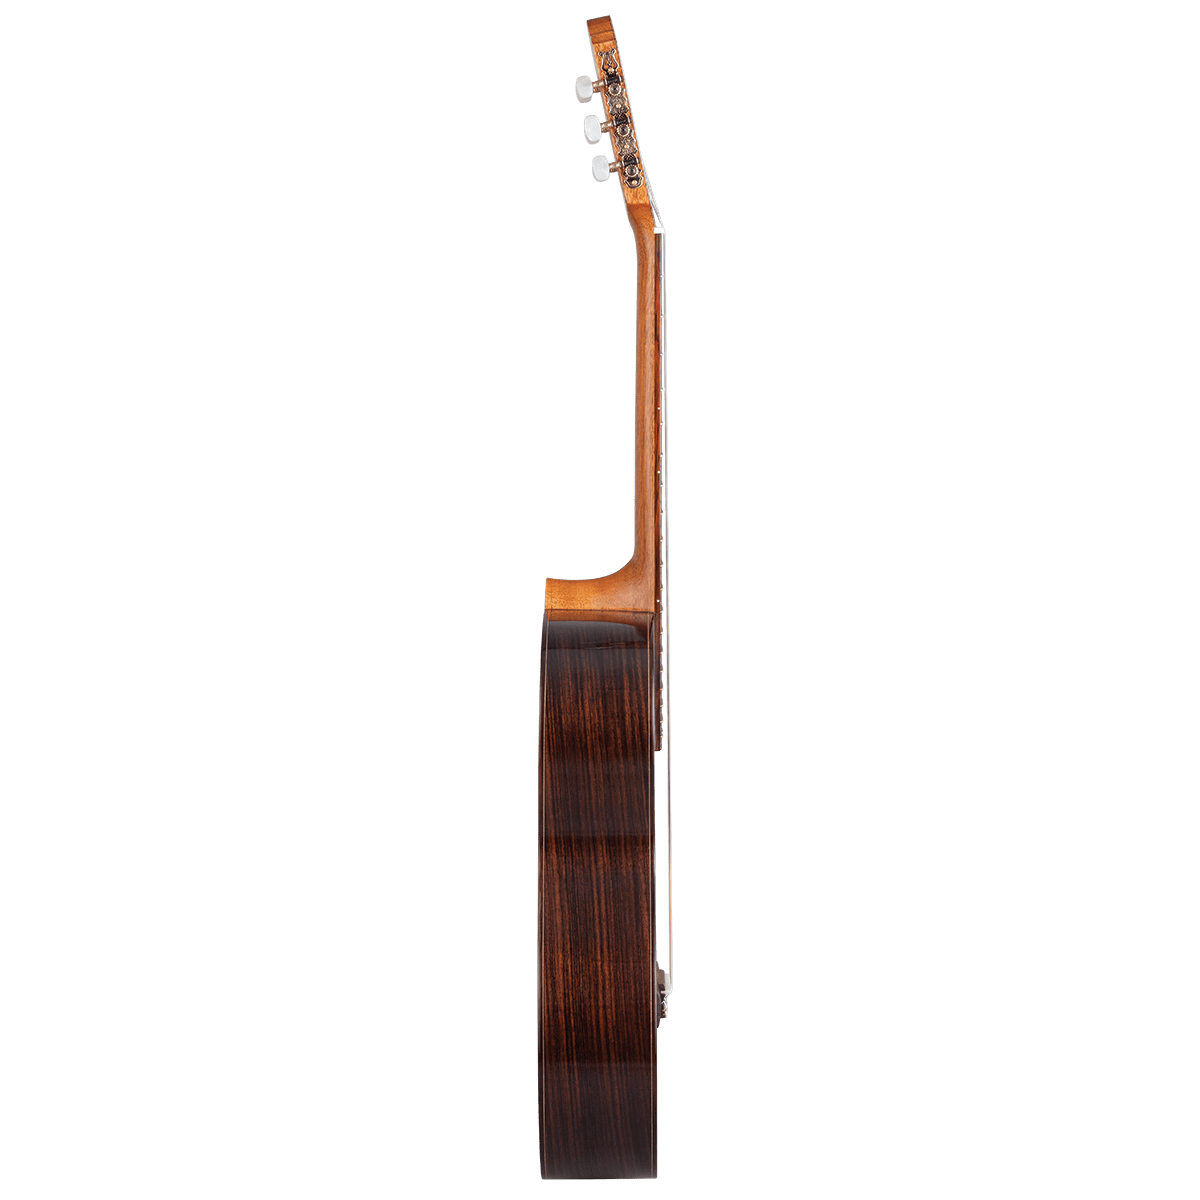 Kremona F65CE Fiesta Cedar / Rosewood Classical Guitar w/Case & LR Baggs pickup